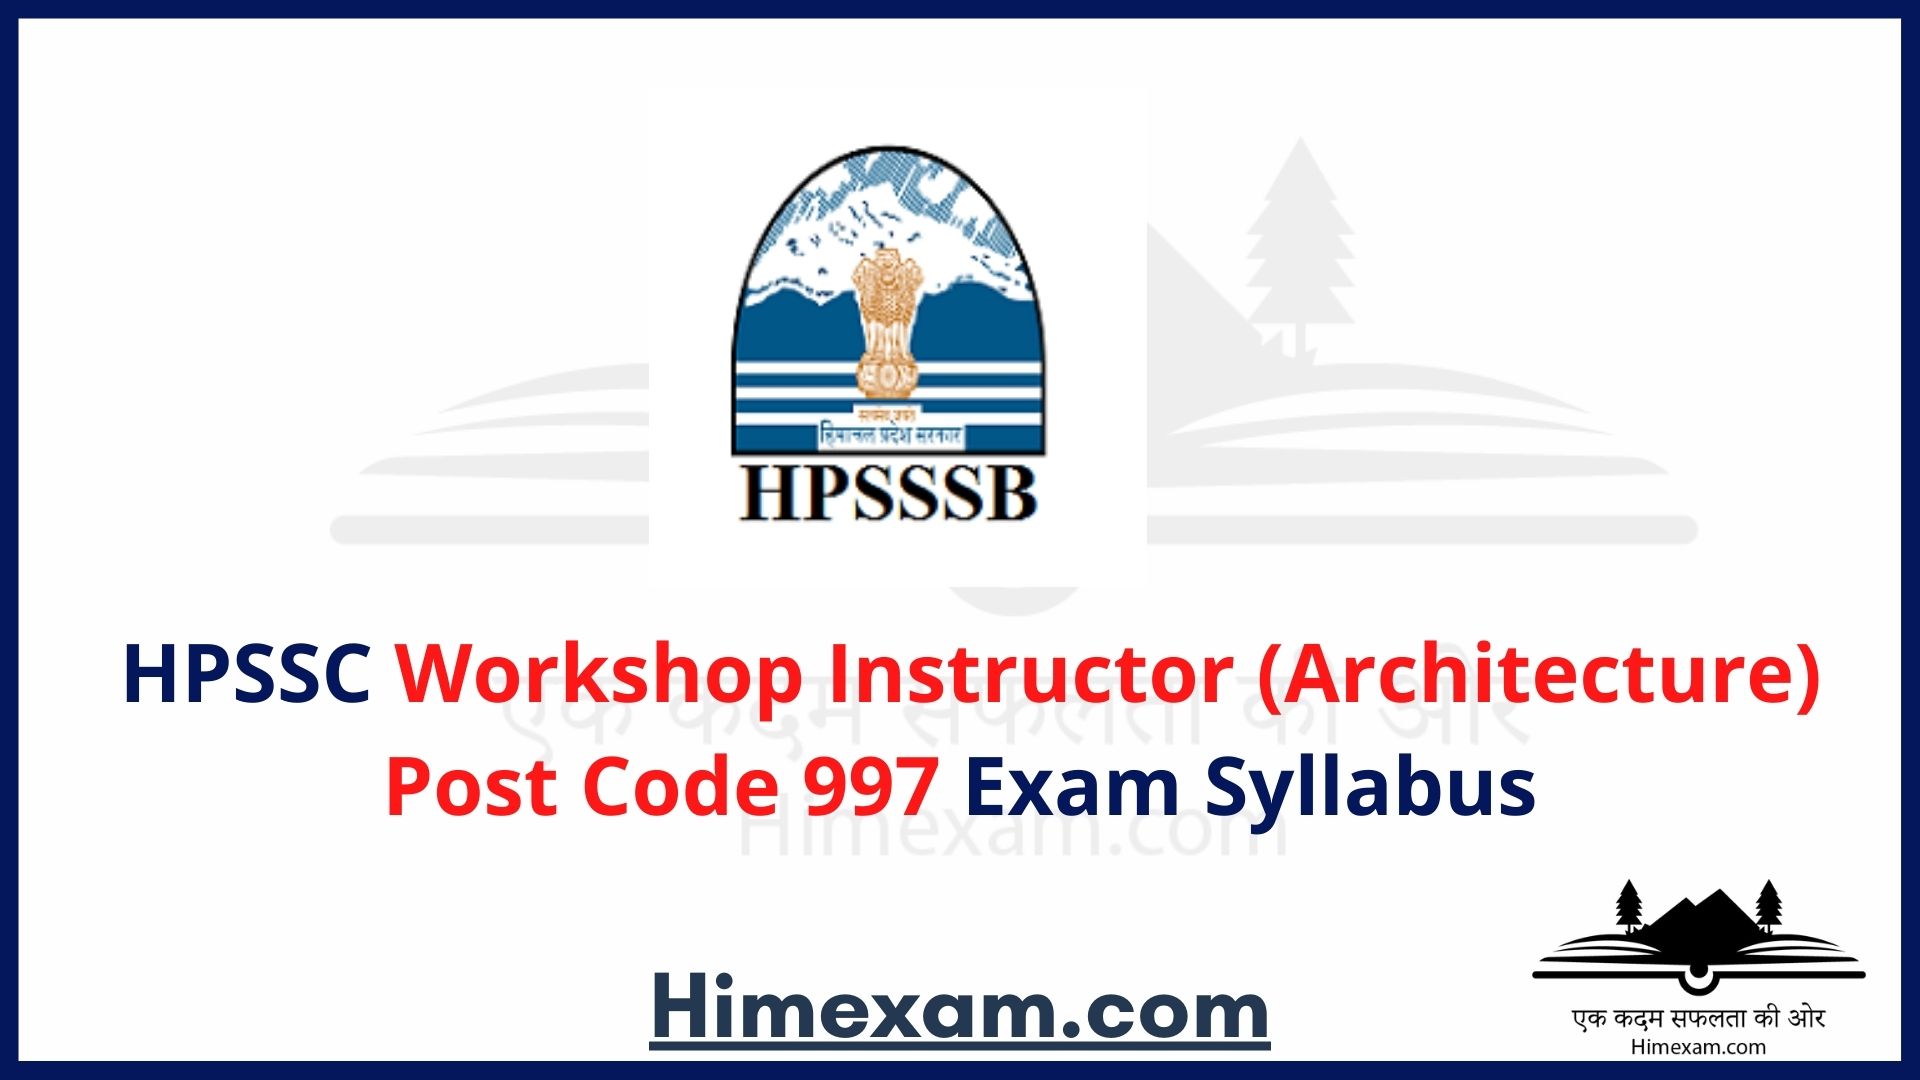 HPSSC Workshop Instructor (Architecture) Post Code 997 Exam Syllabus